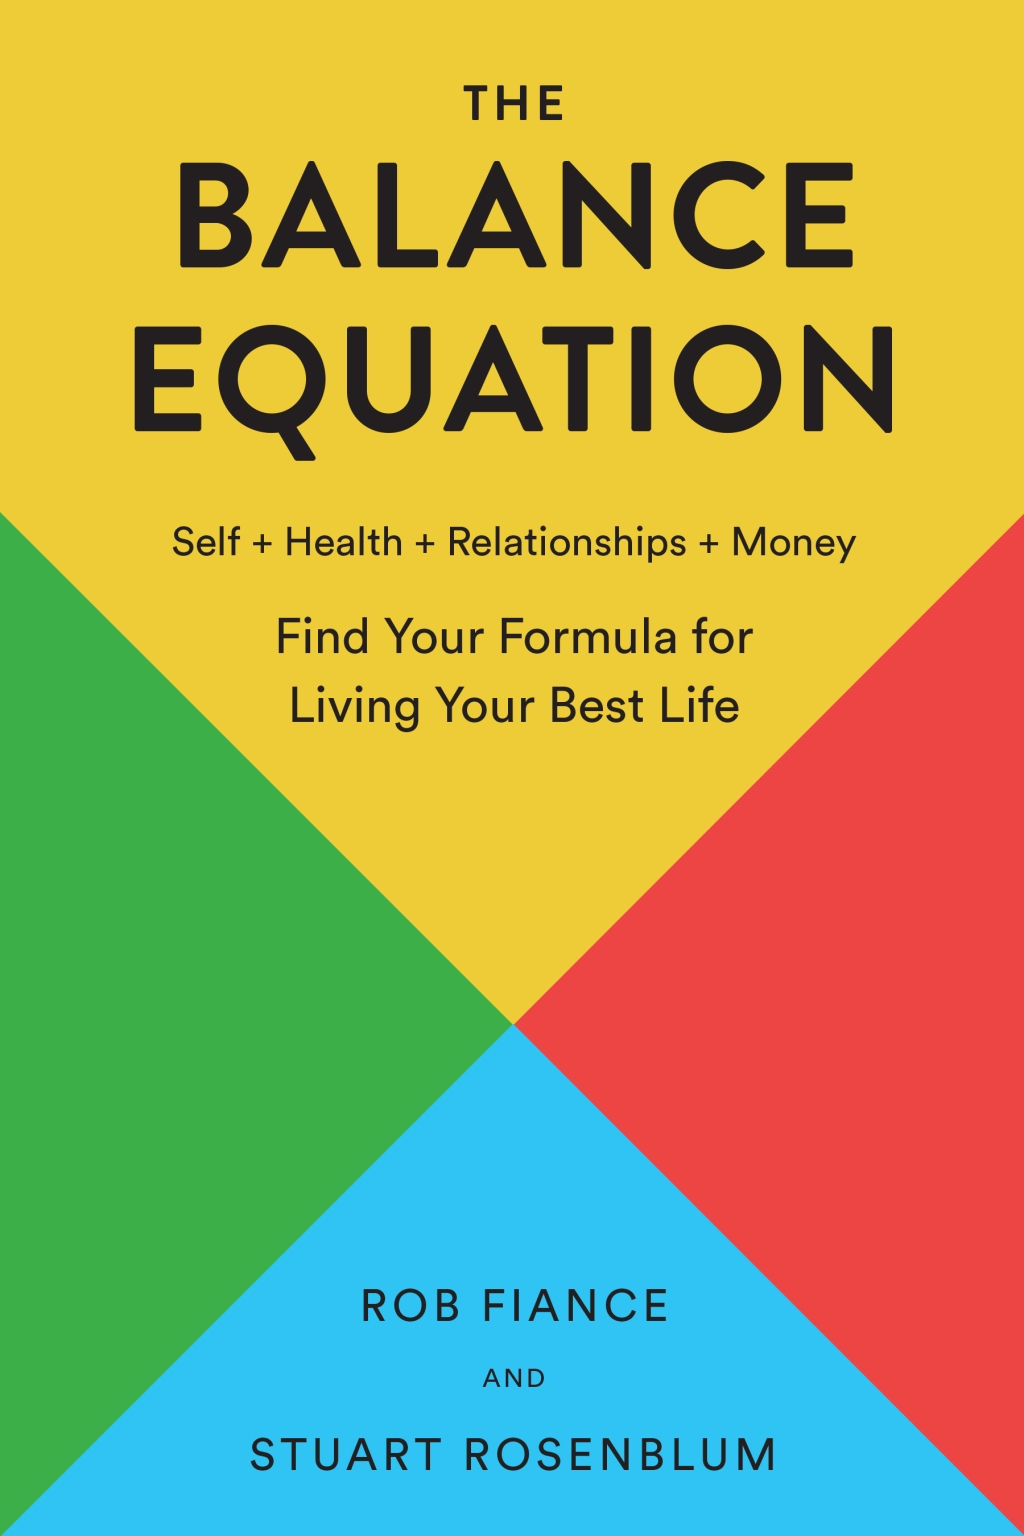 Custom Book: The Balance Equation by Rob Fiance and Stuart Rosenblum